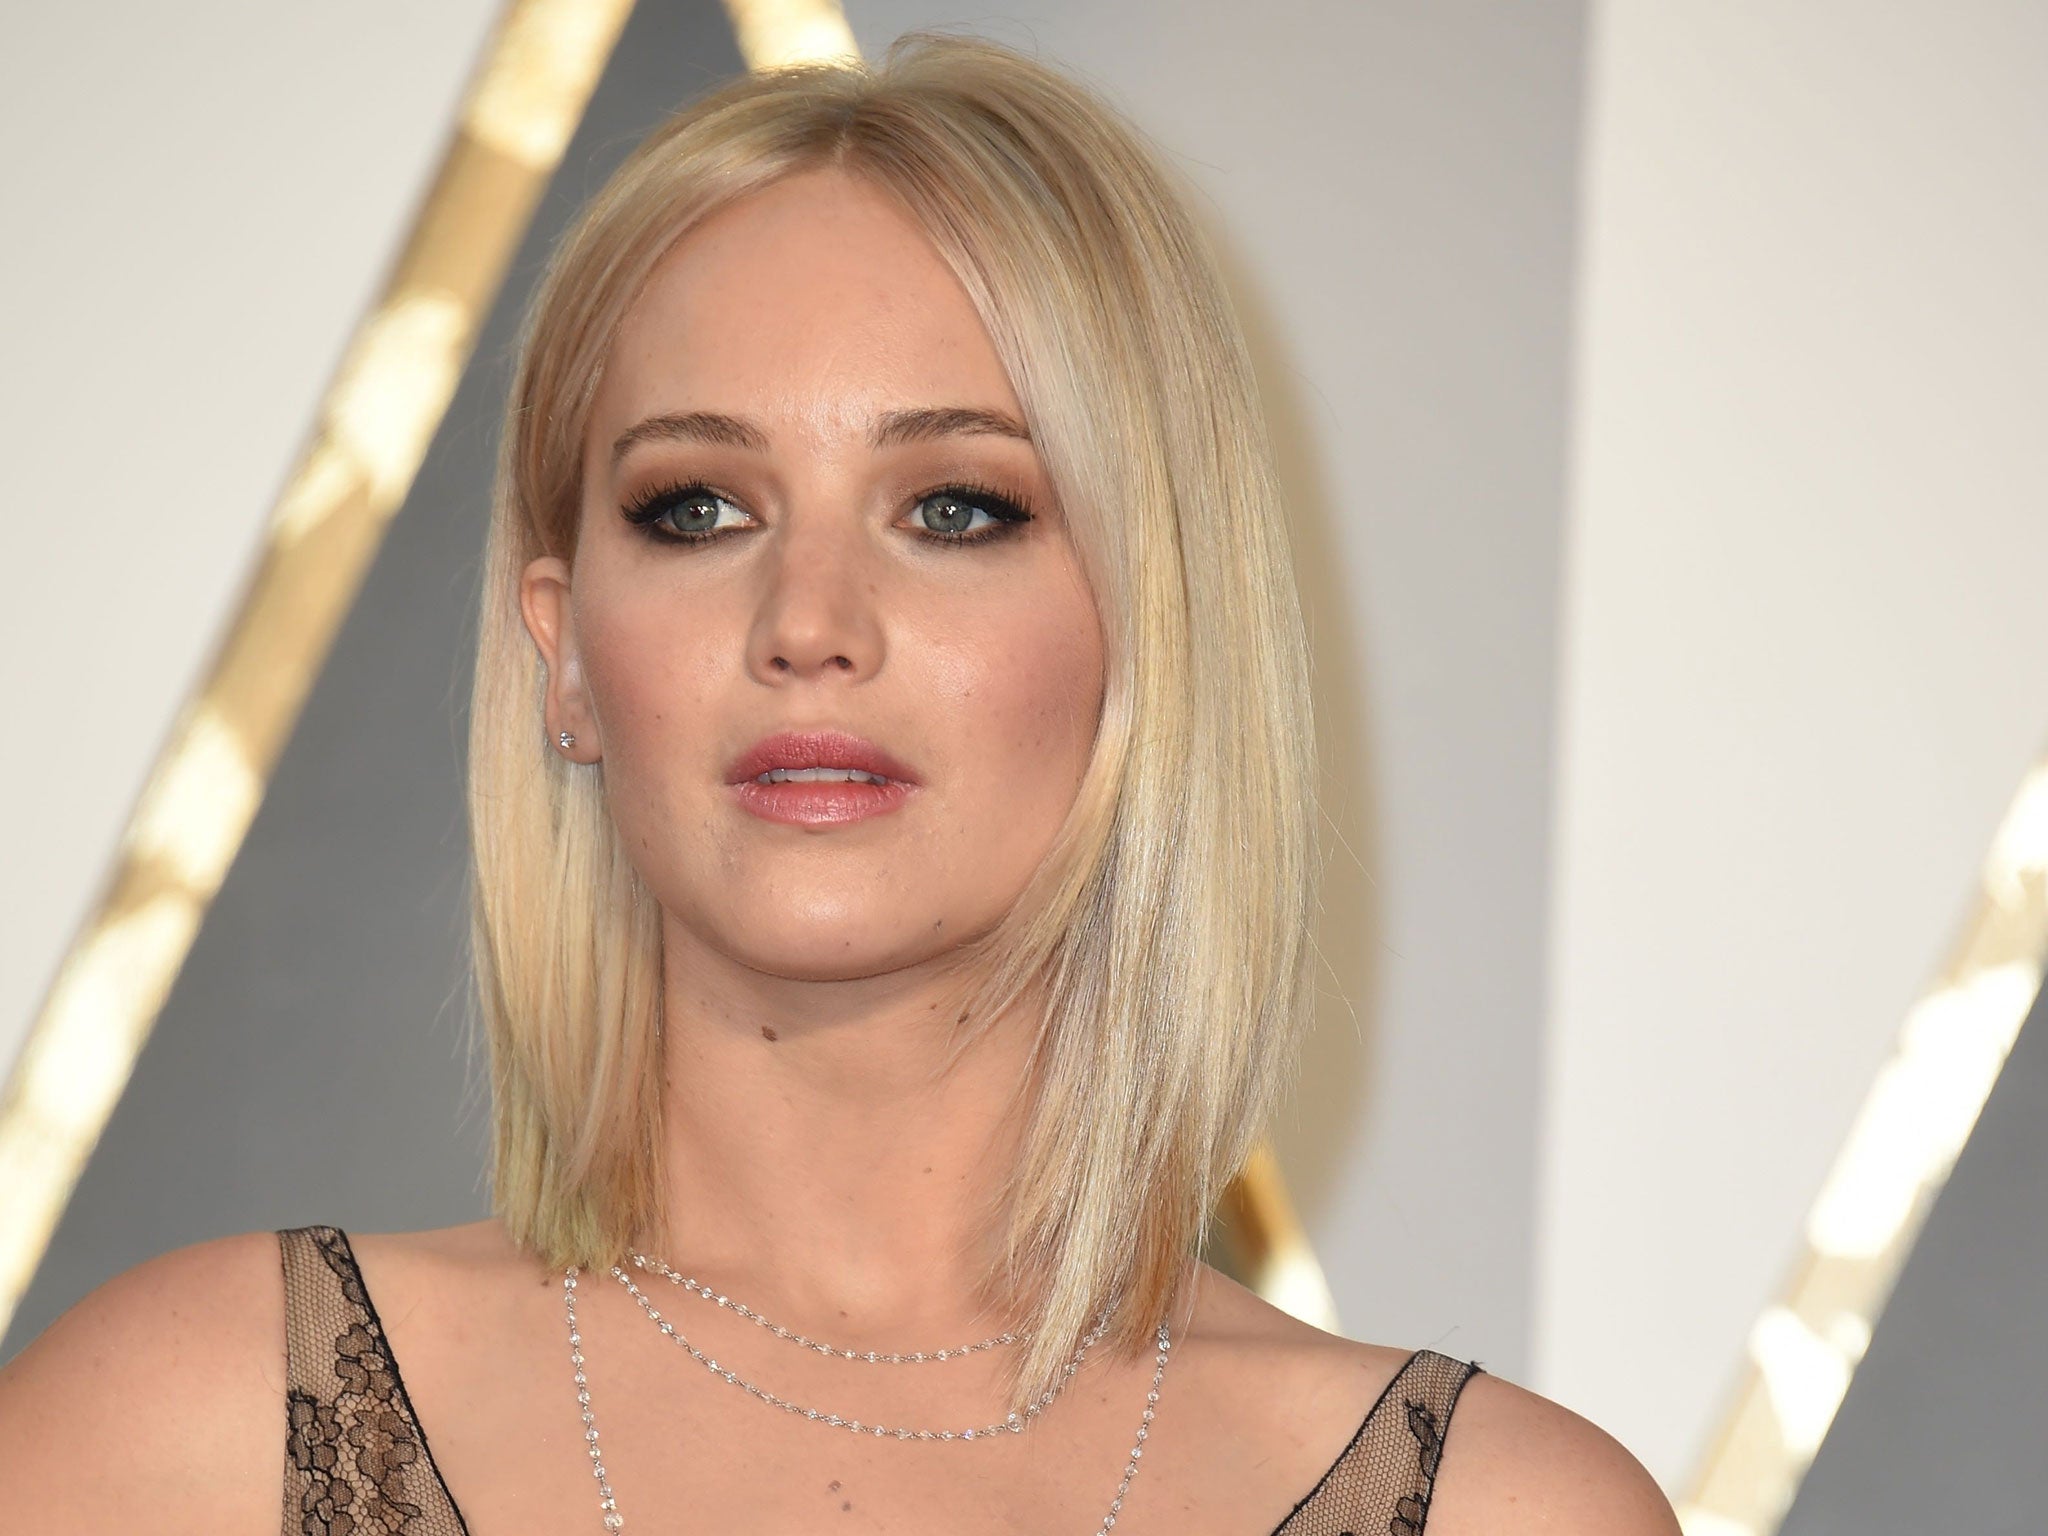 Could Jennifer Lawrence appear in the Ocean's Eleven reboot?